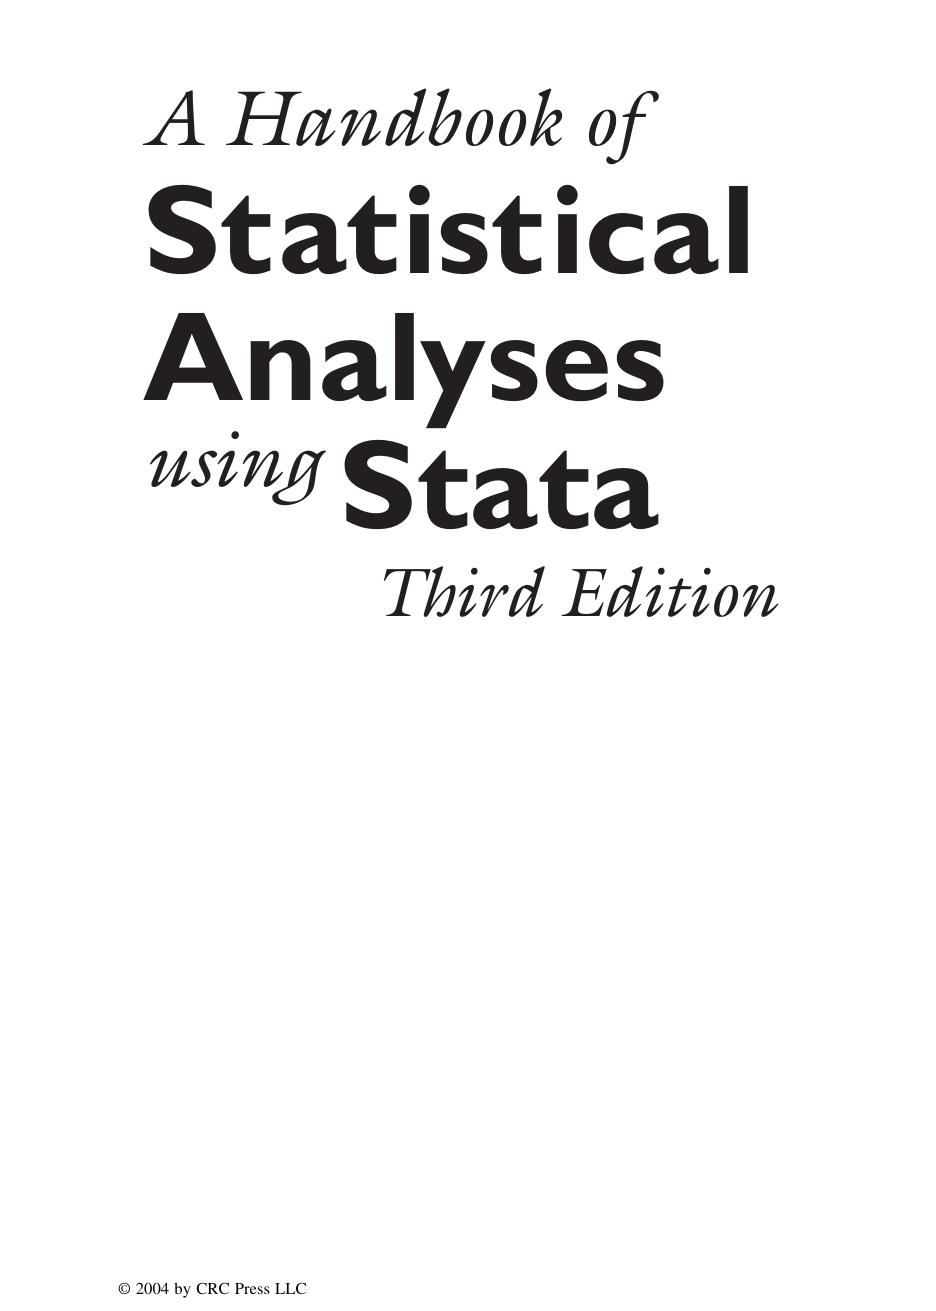 Handbook of Statistical Analyses Using Stata, Third Edition